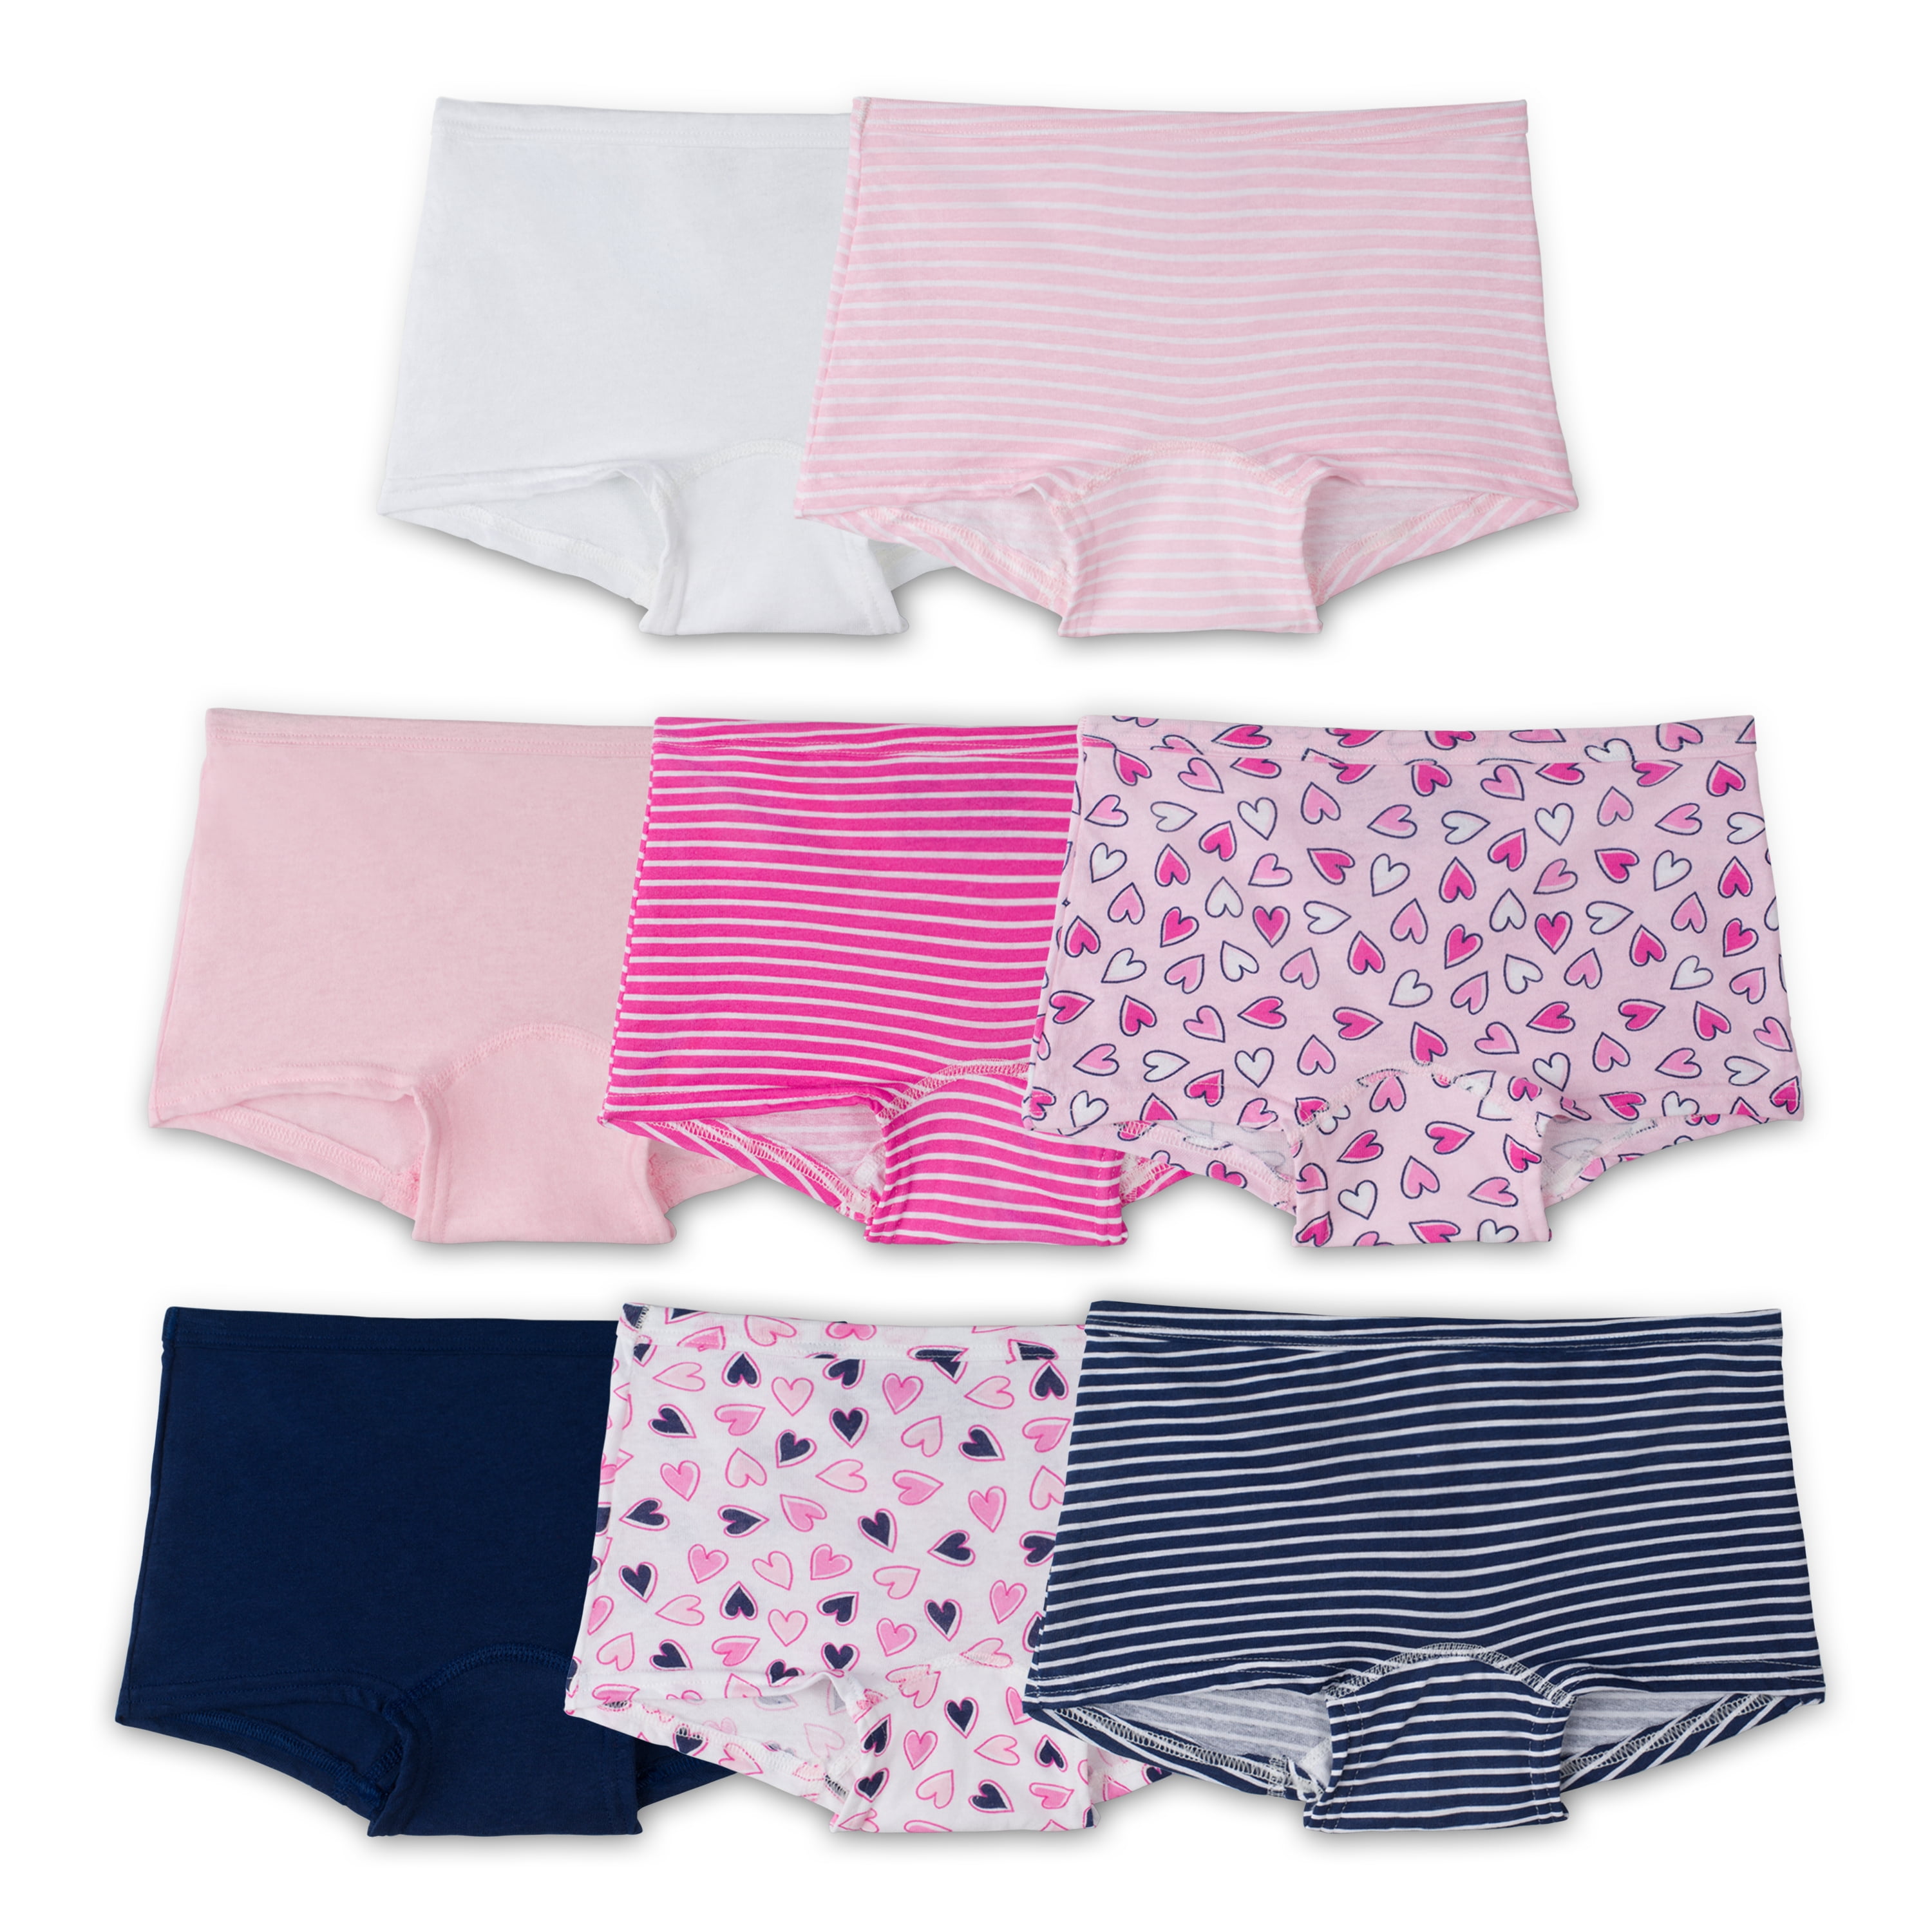 Fruit of the Loom Girls' Assorted Boyshort Underwear, 11 Pack